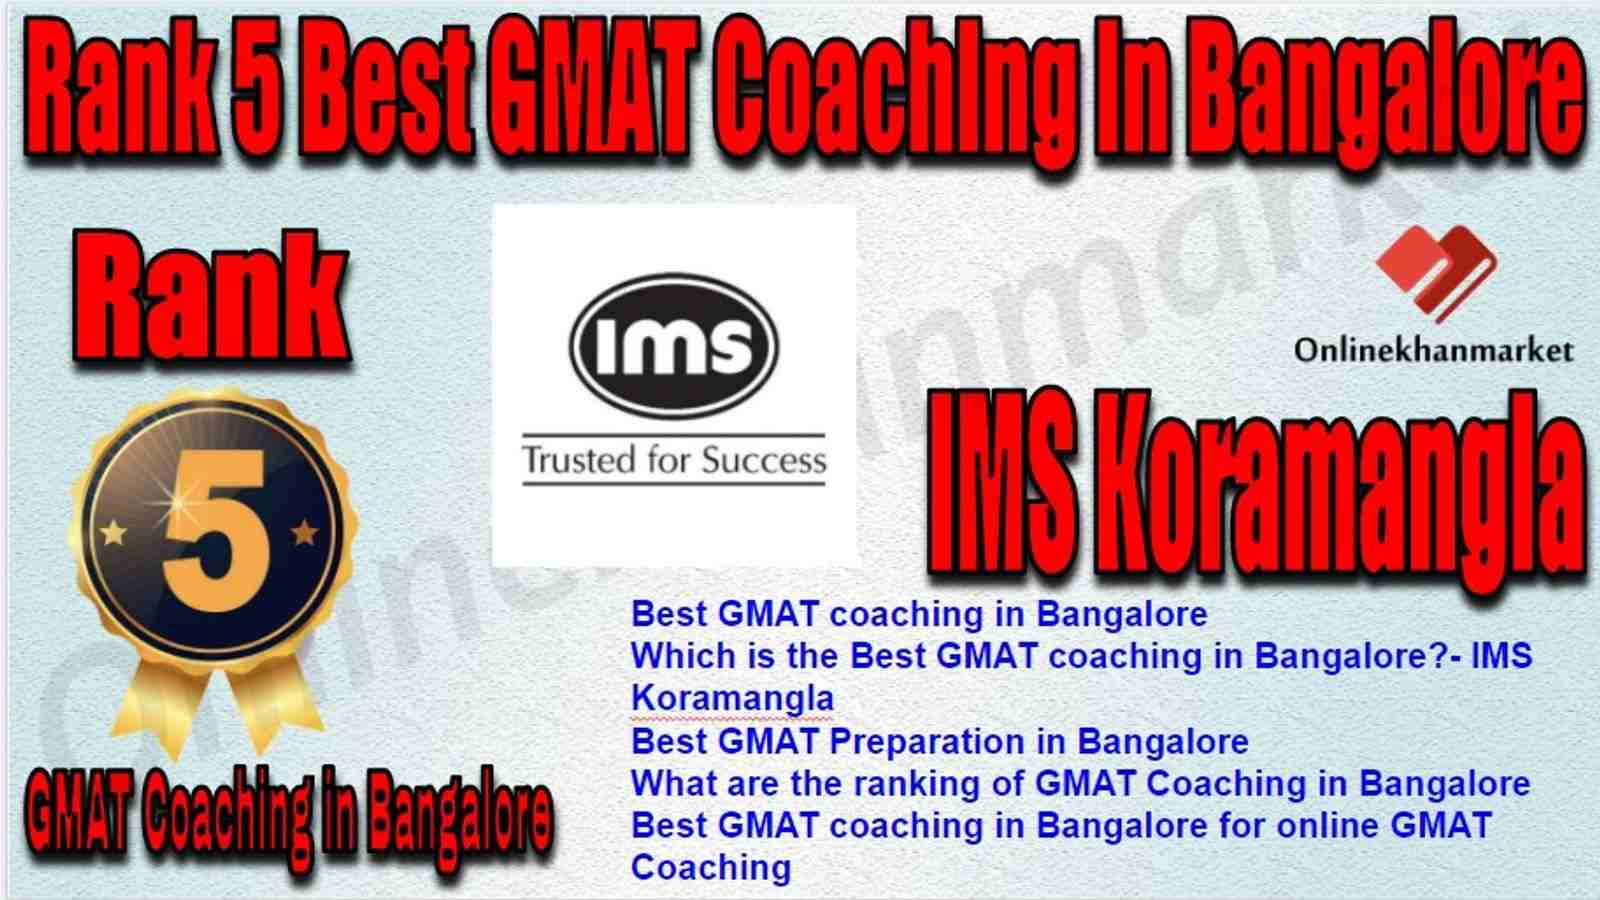 Rank 5 Best GMAT Coaching in Bangalore